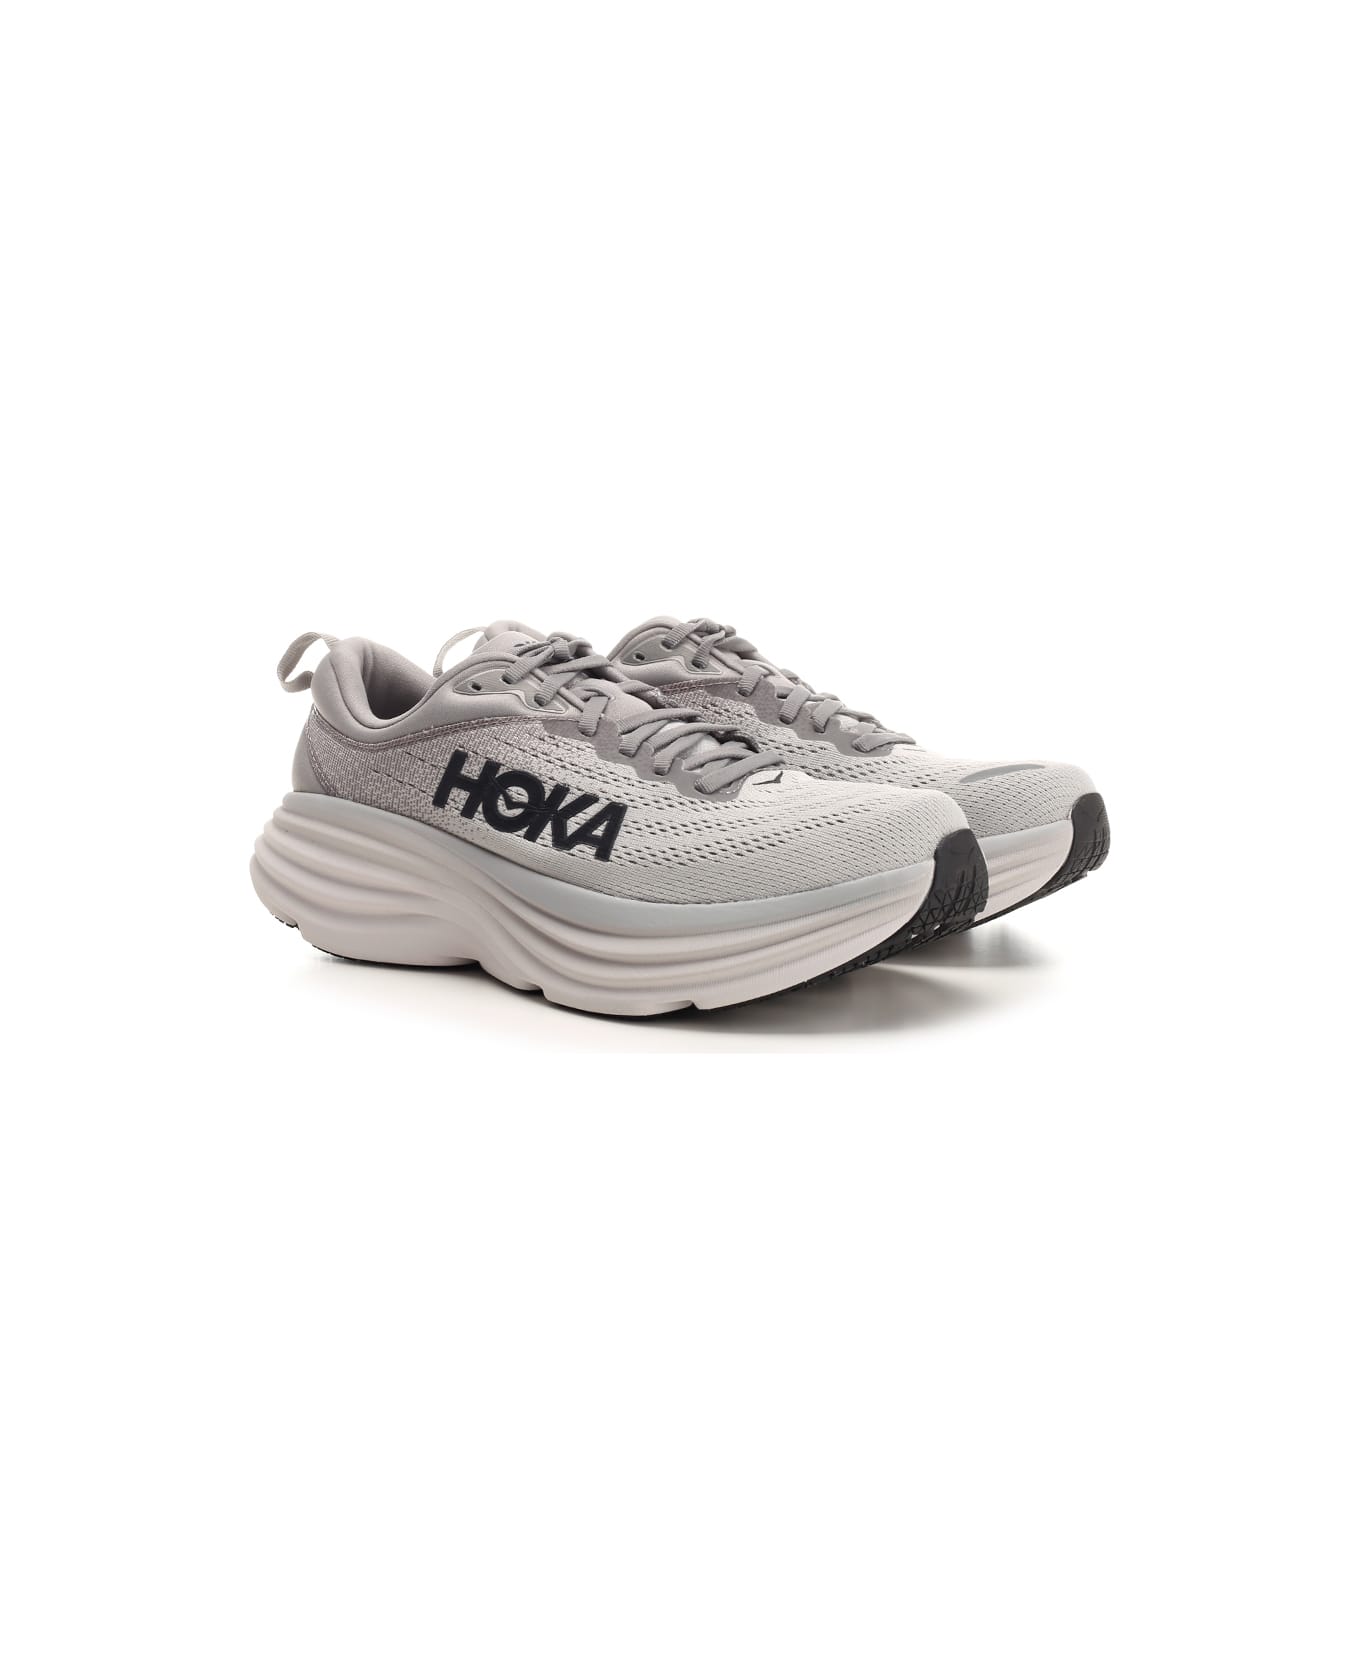 Hoka "bondi" Sneakers - Grey